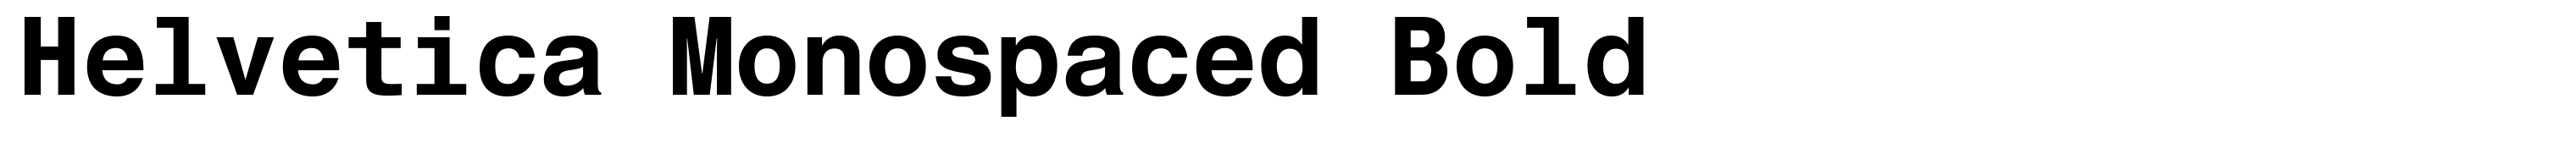 Helvetica Monospaced Bold